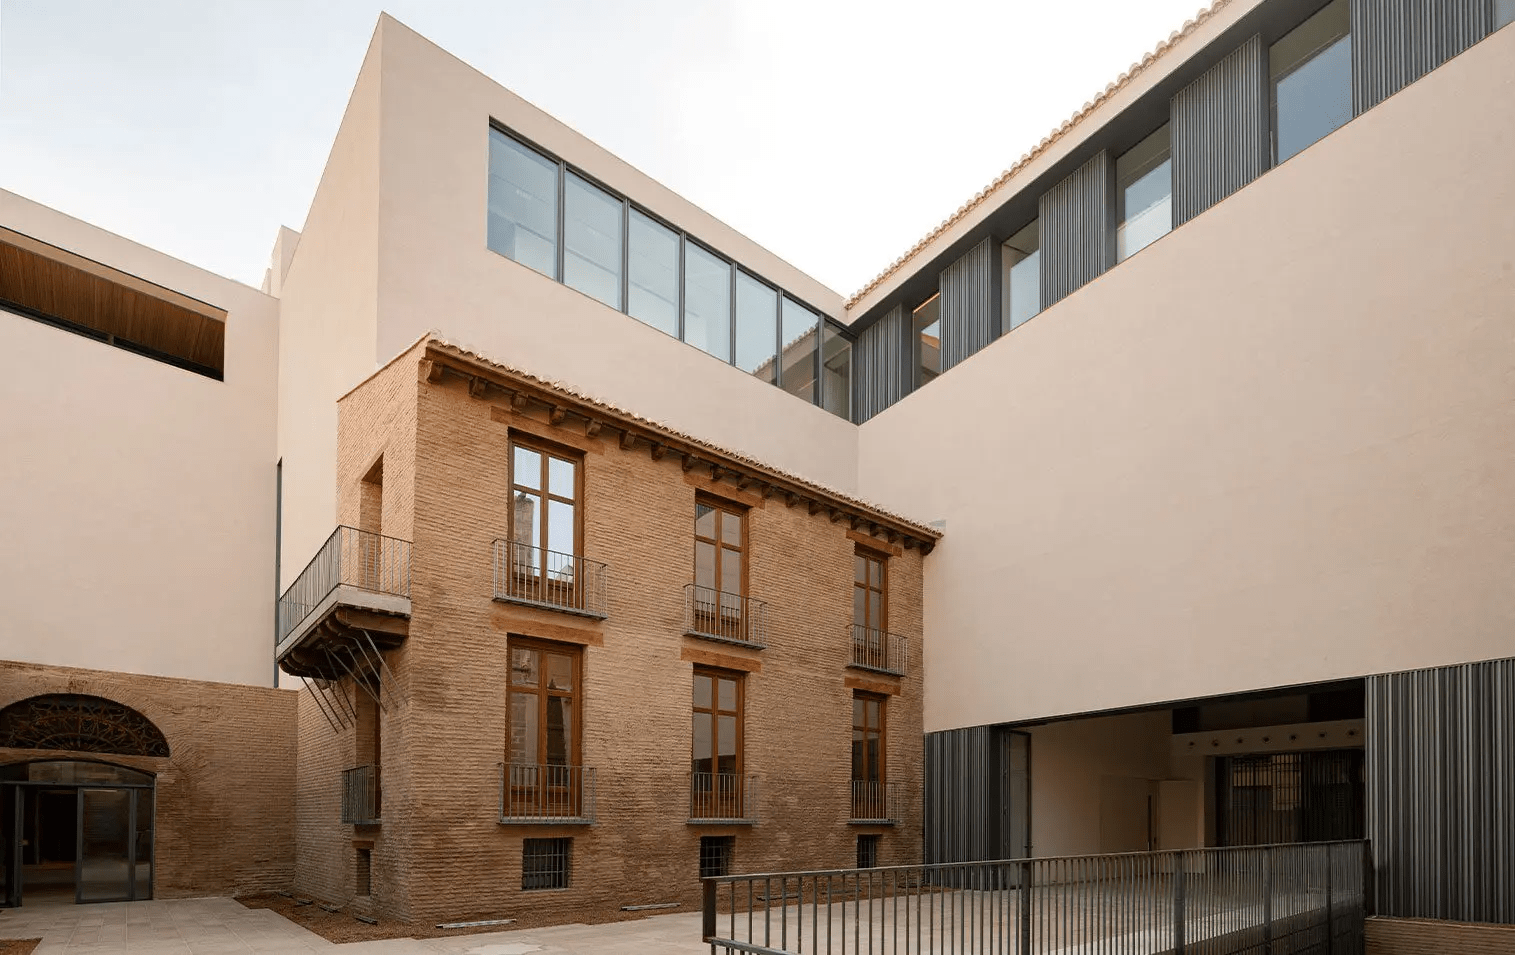 Image of the facade of the Hortensia Herrero Art Center in Valencia, Spain